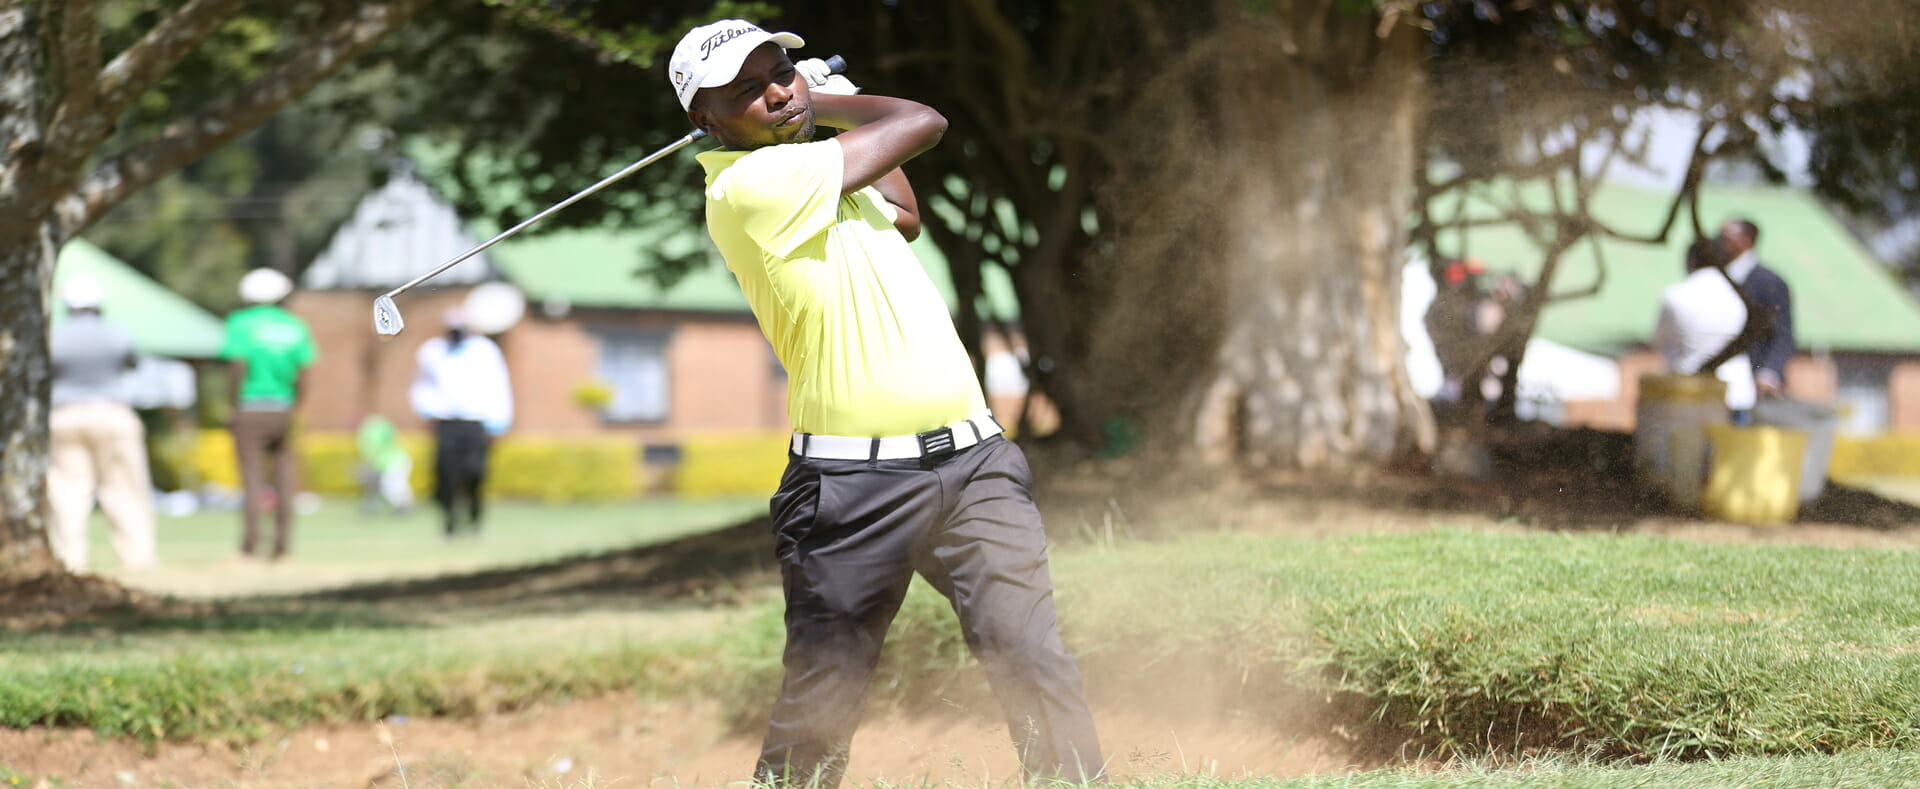 Bundi wins first leg of Safaricom Golf Tour at Nanyuki